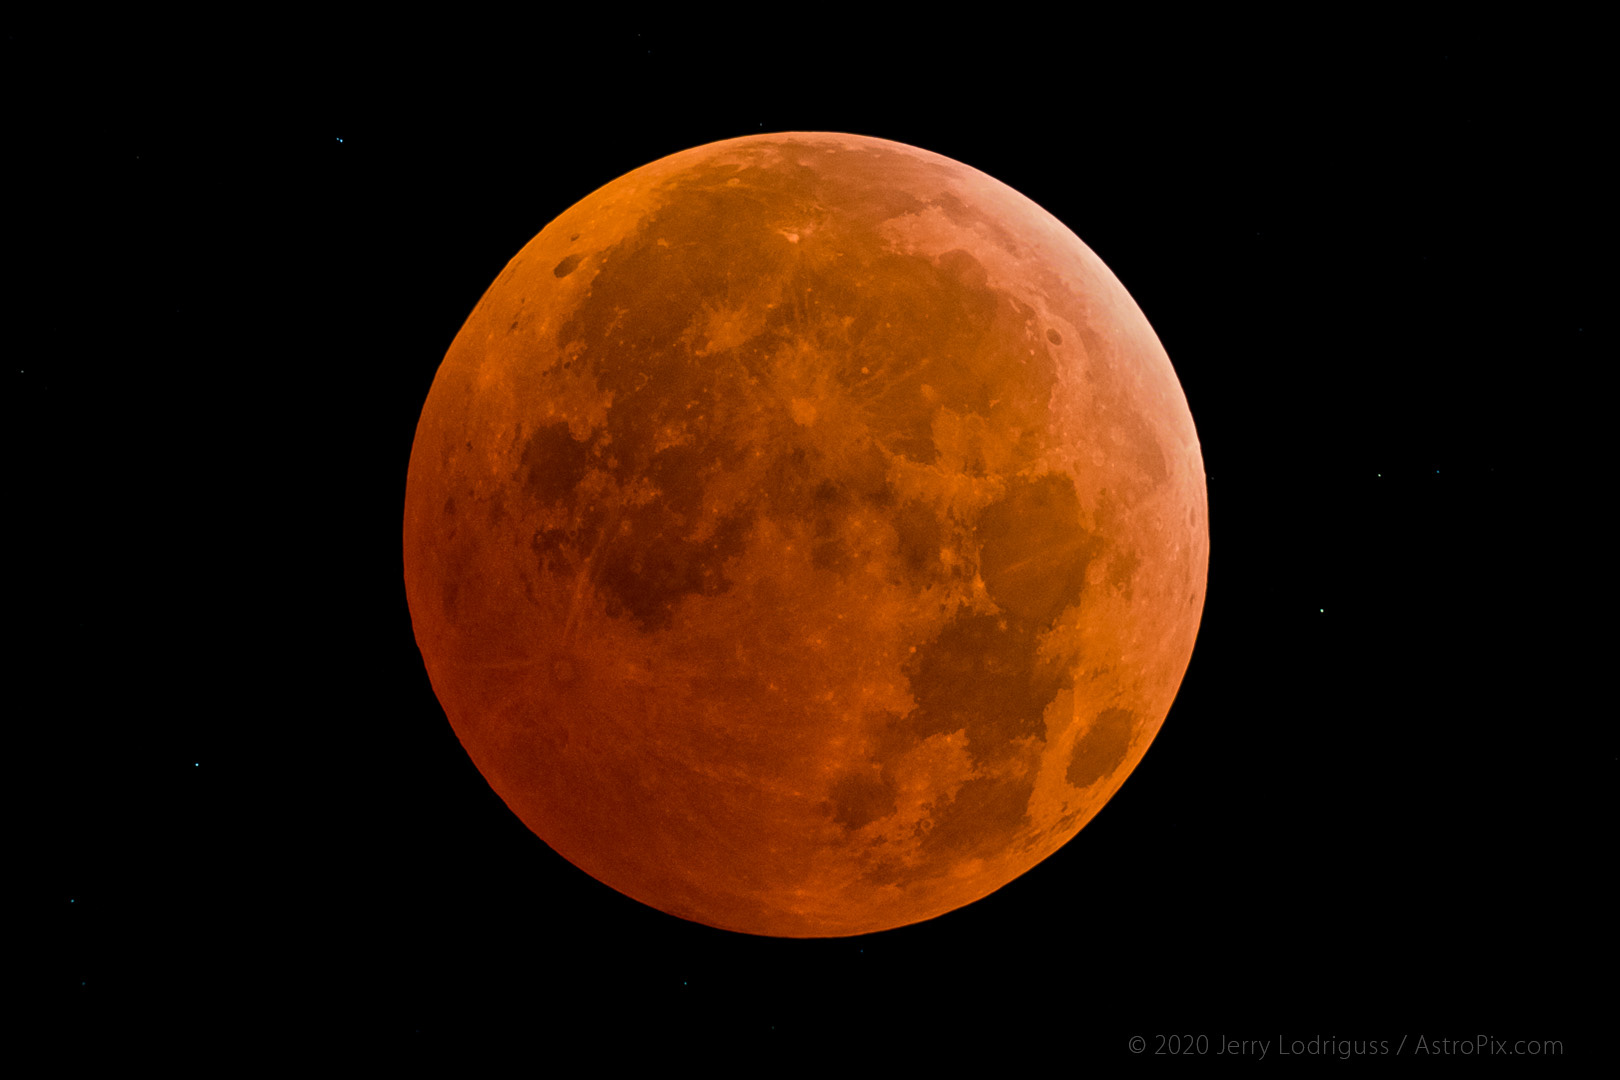 December 21, 2010 Solstice Total Lunar Eclipse in Taurus.